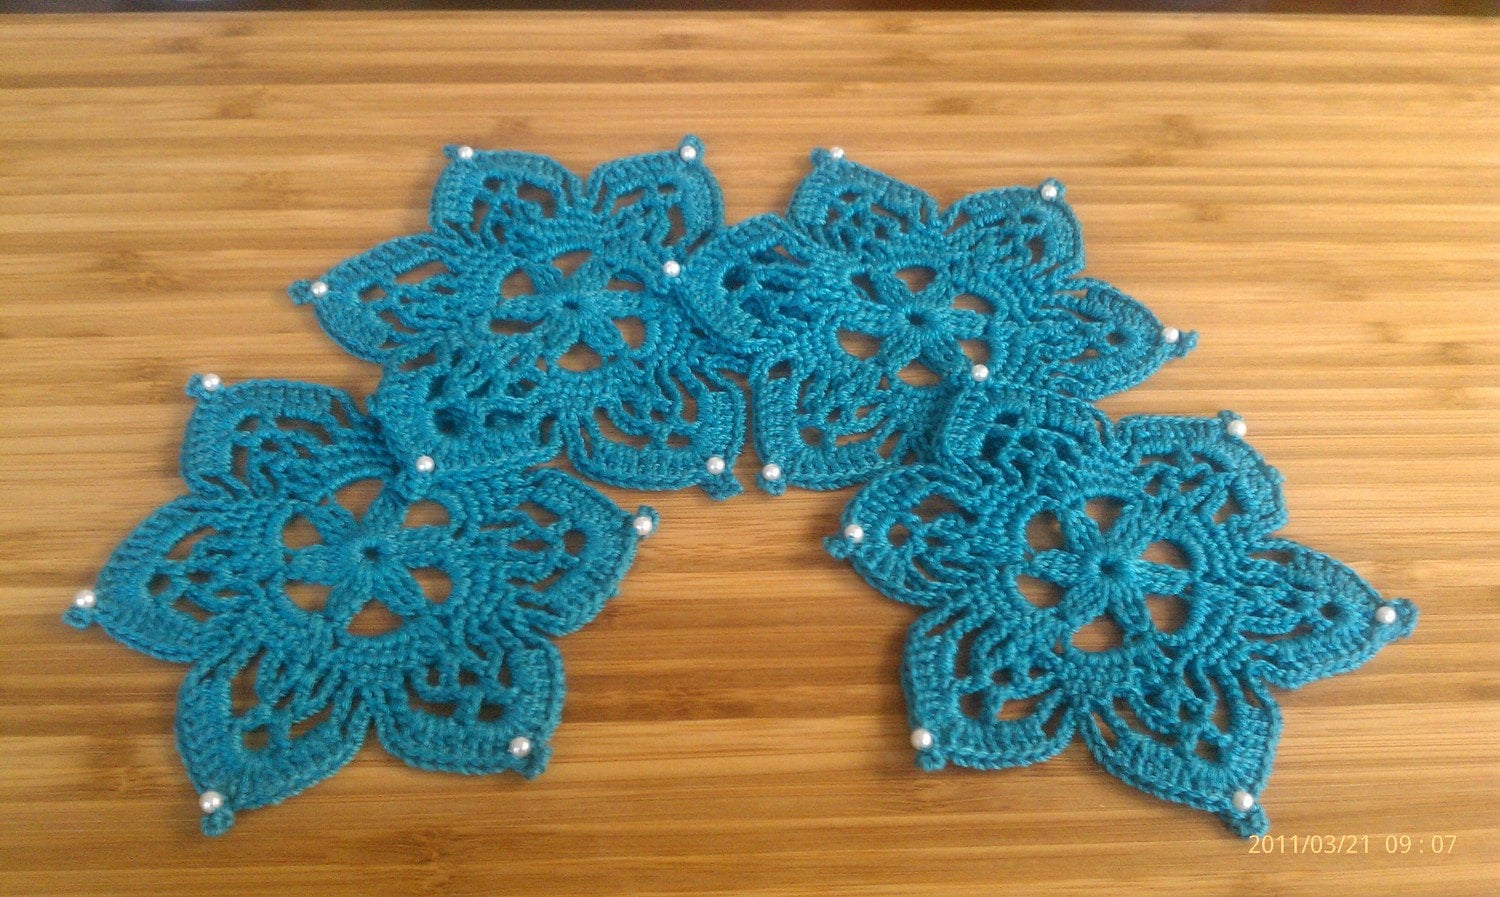 Crochet Necklace | Knit Rowan - Yarns, Knitting Patterns, Crochet